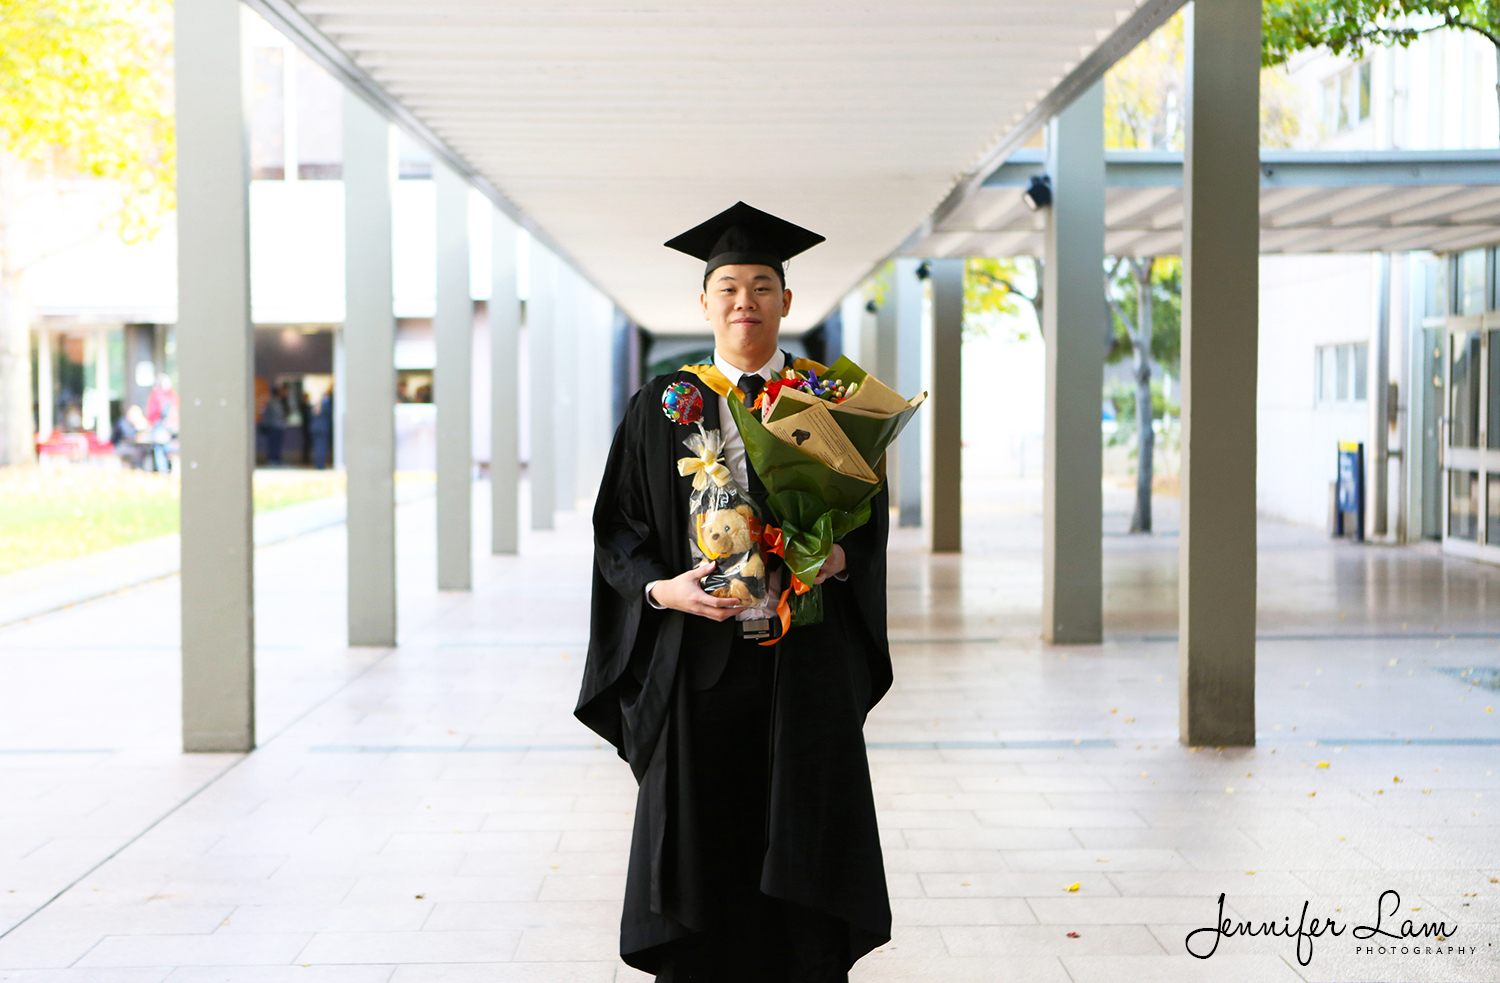 UNSW - Sydney Graduation Photos - Jennifer Lam Photography (10).JPG